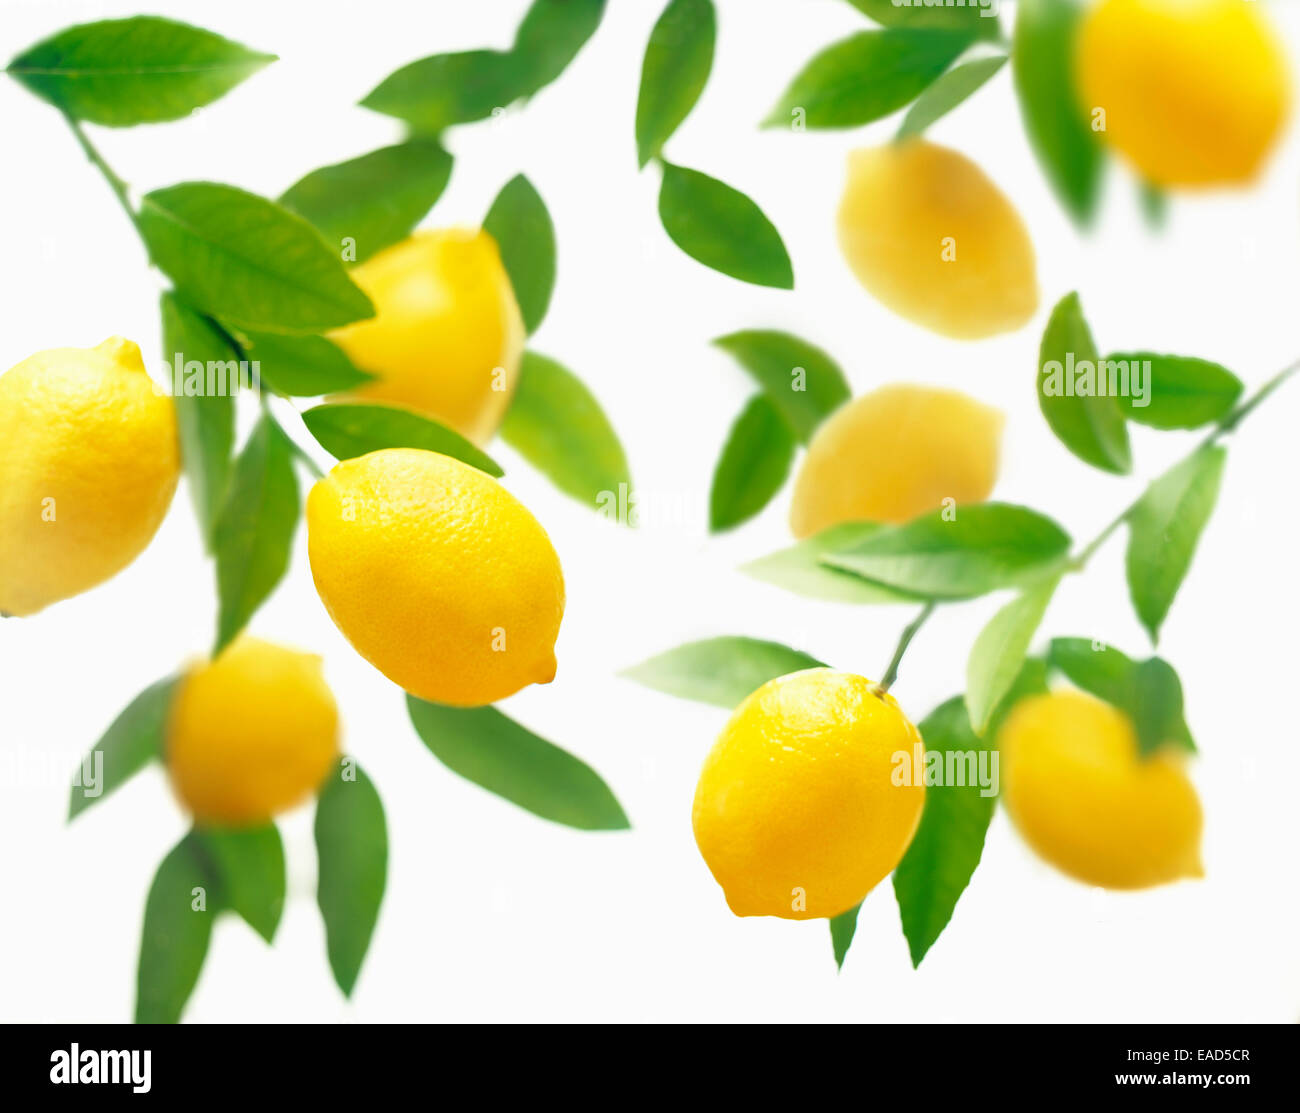 Lemon, Citrus limon, Yellow subject, White background. Stock Photo